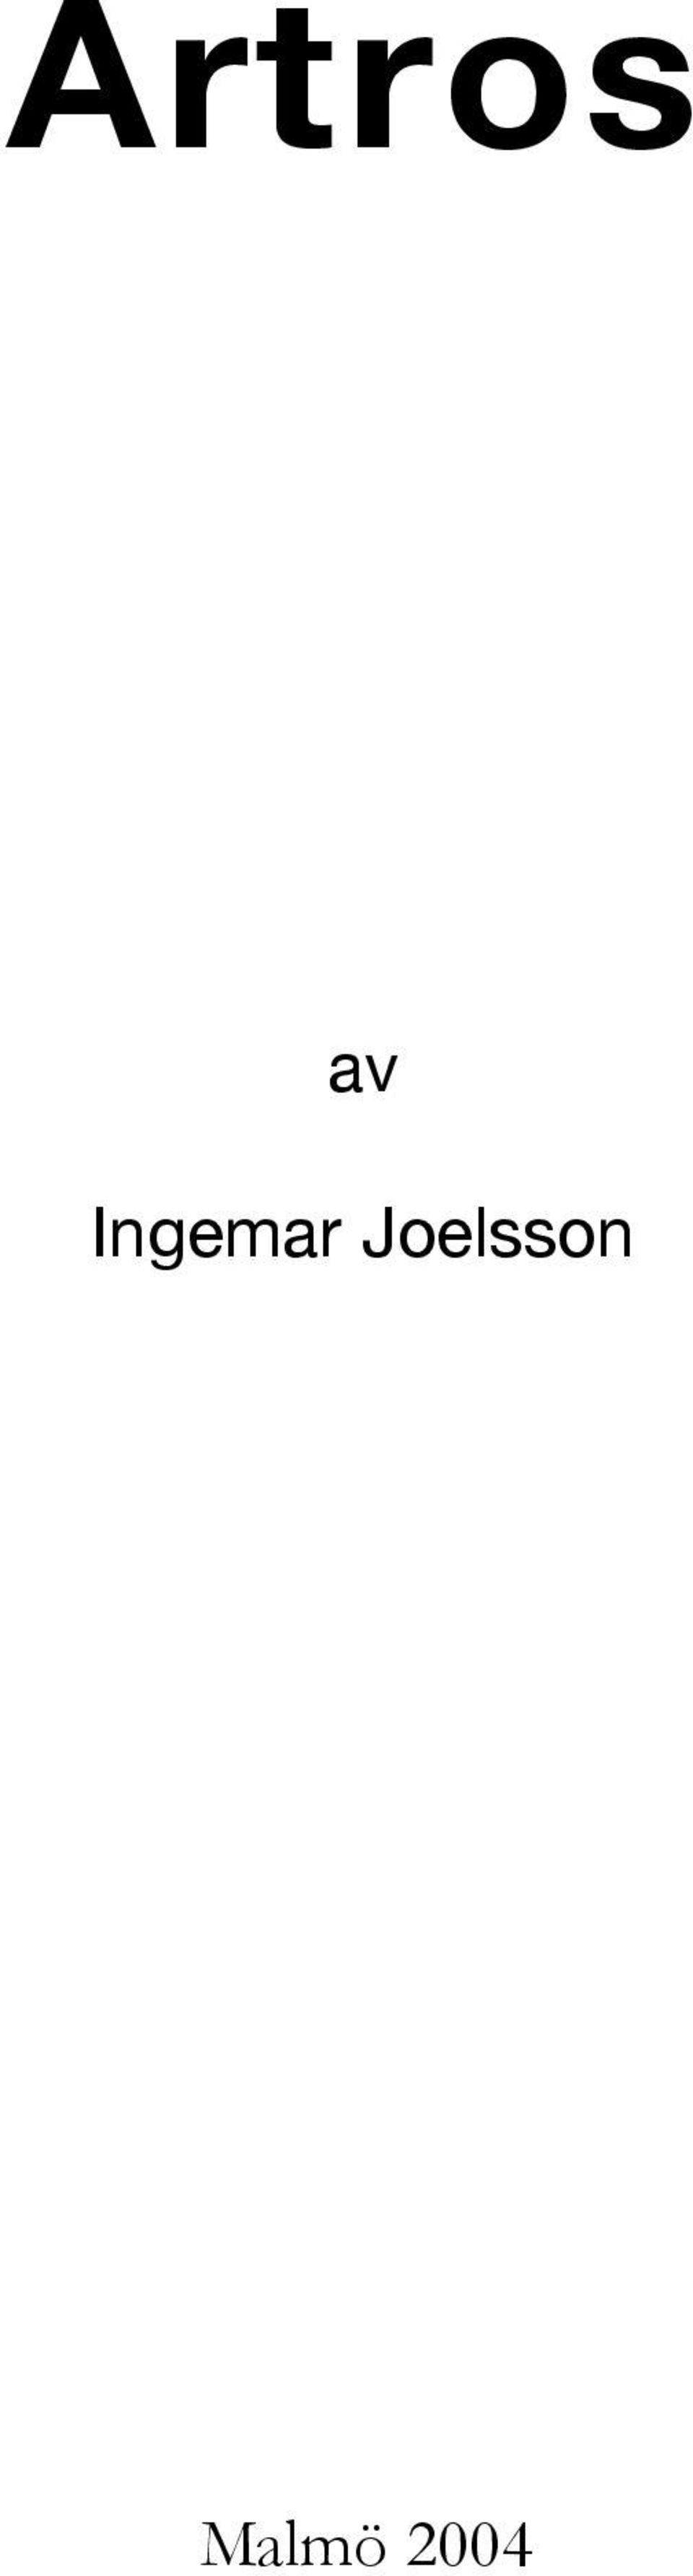 Joelsson